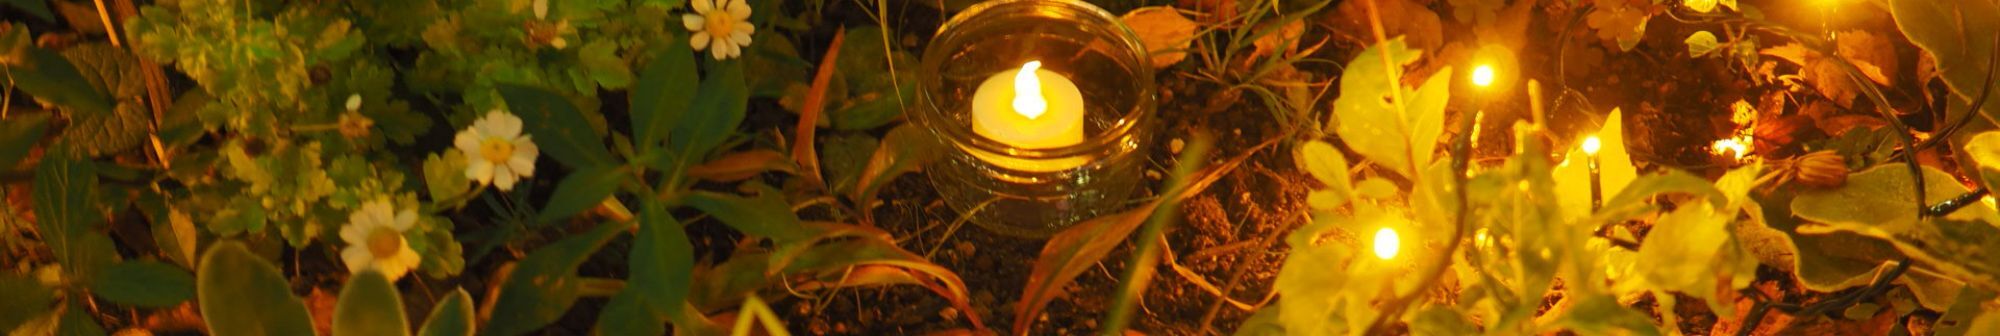 candle-burns-amongst-garden-and-lights